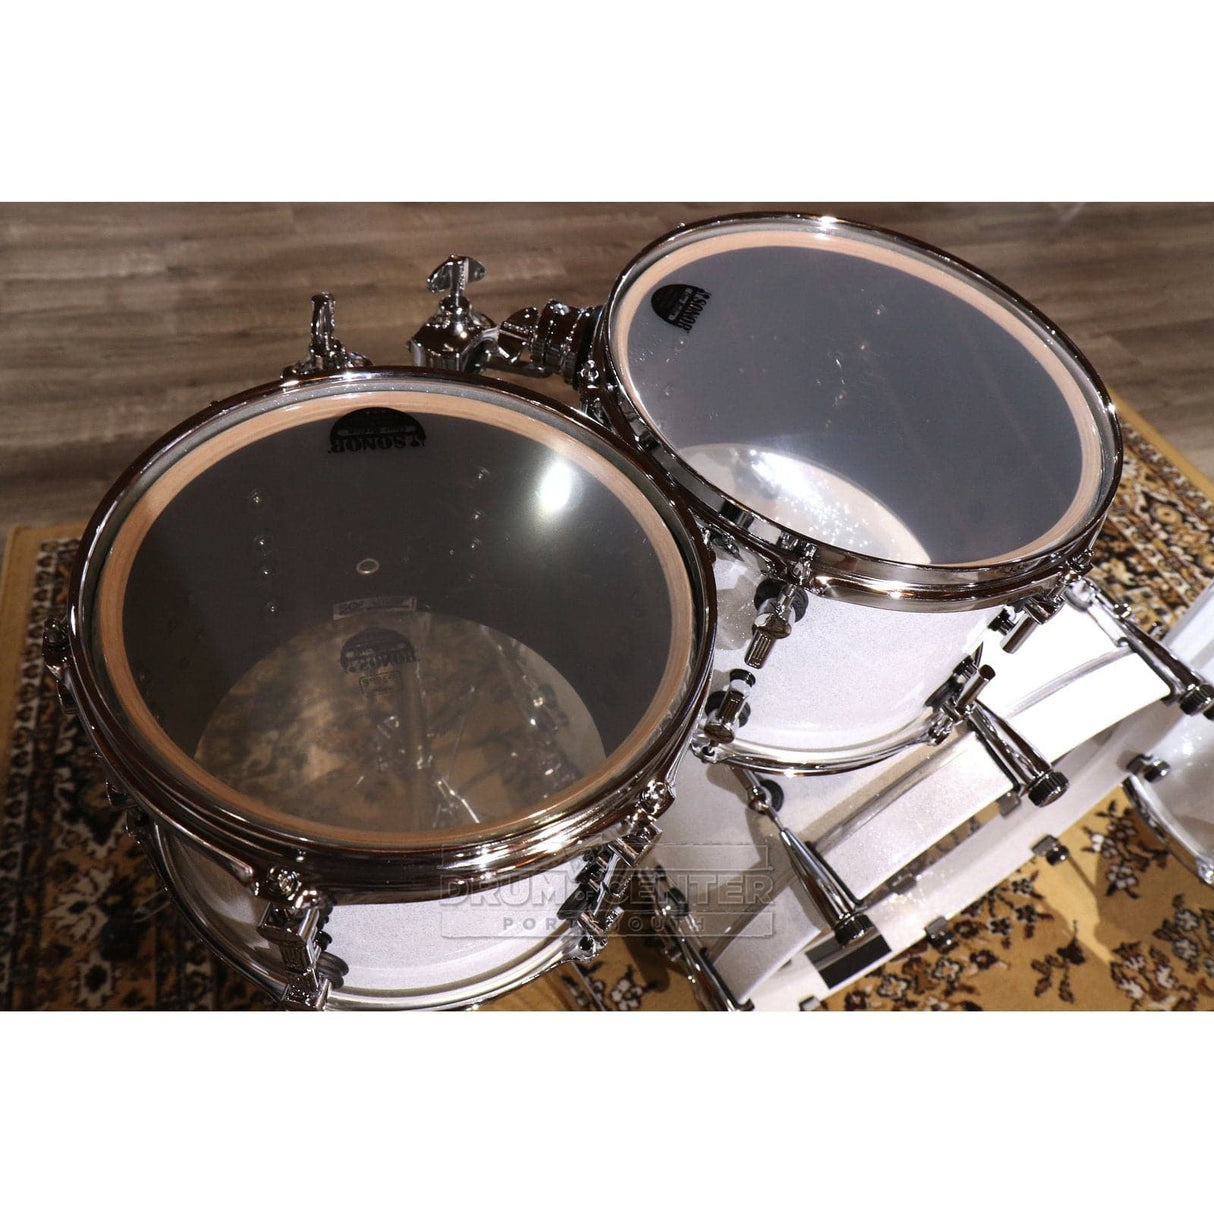 Sonor SQ2 Beech 4pc Drum Set White Sparkle Lacquer